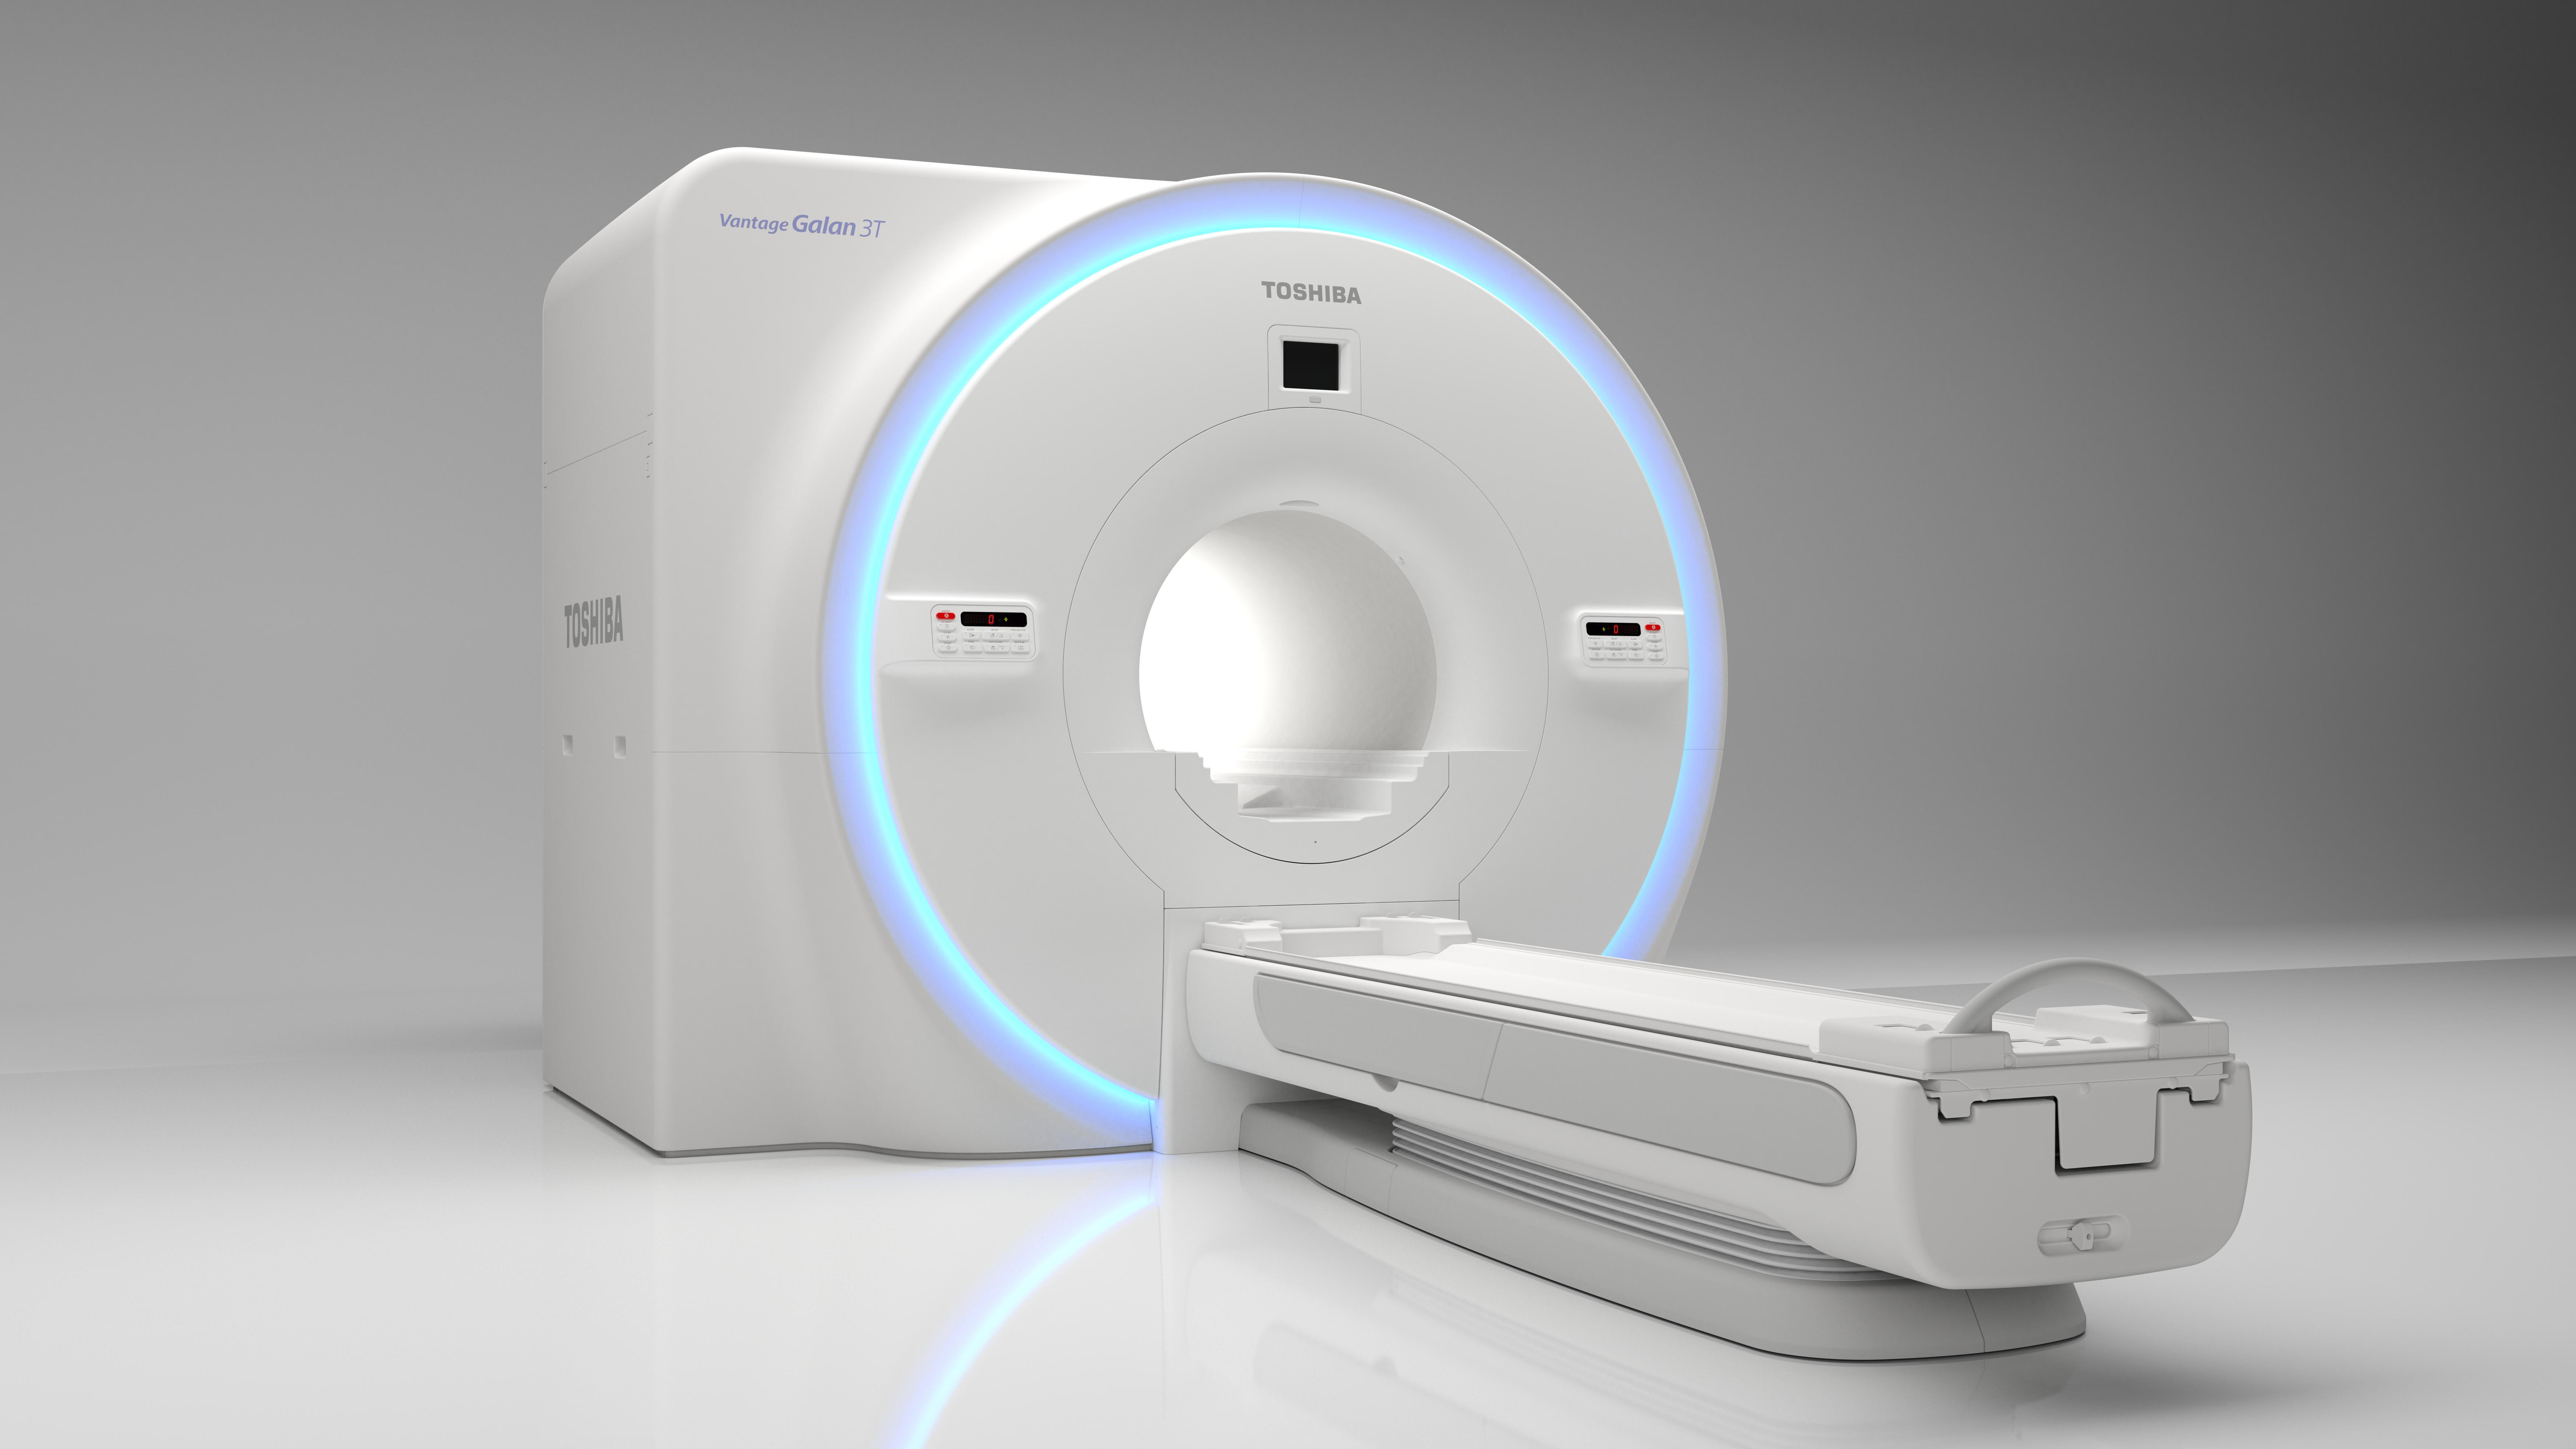 interventional radiology